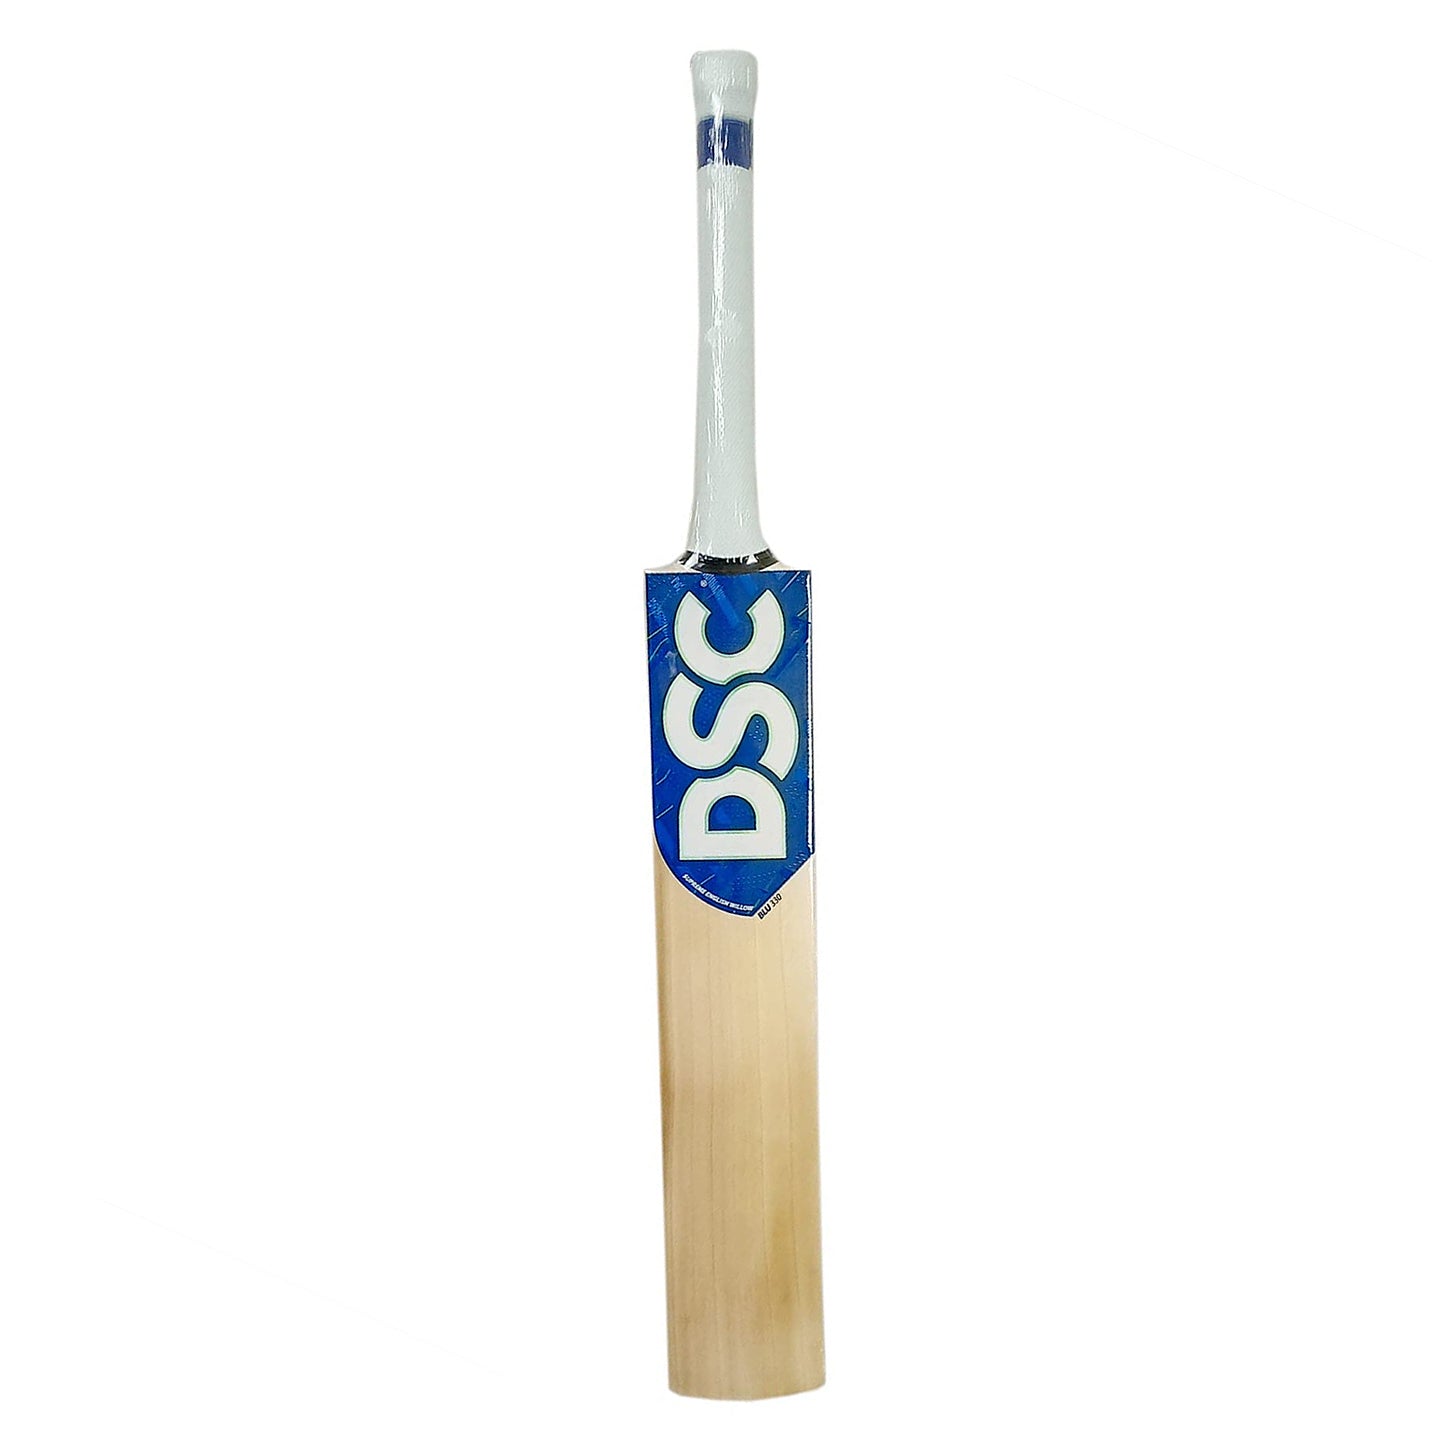 DSC Blu 330 English Willow Cricket Bat - Best Price online Prokicksports.com